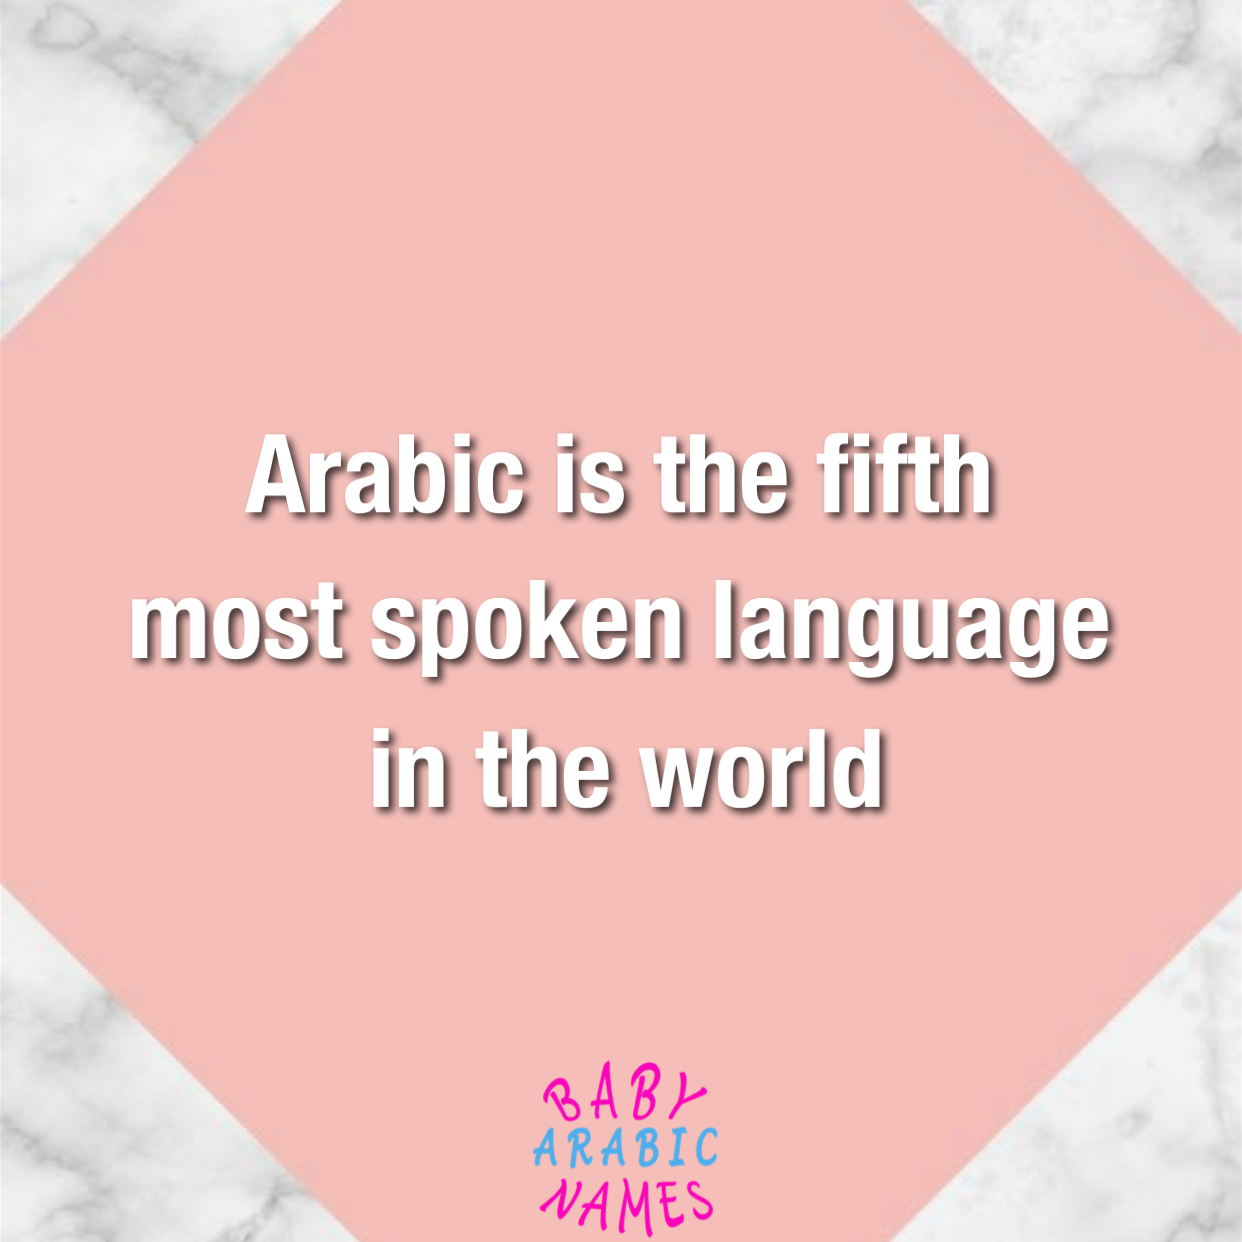 Arabic 5th most spoken language